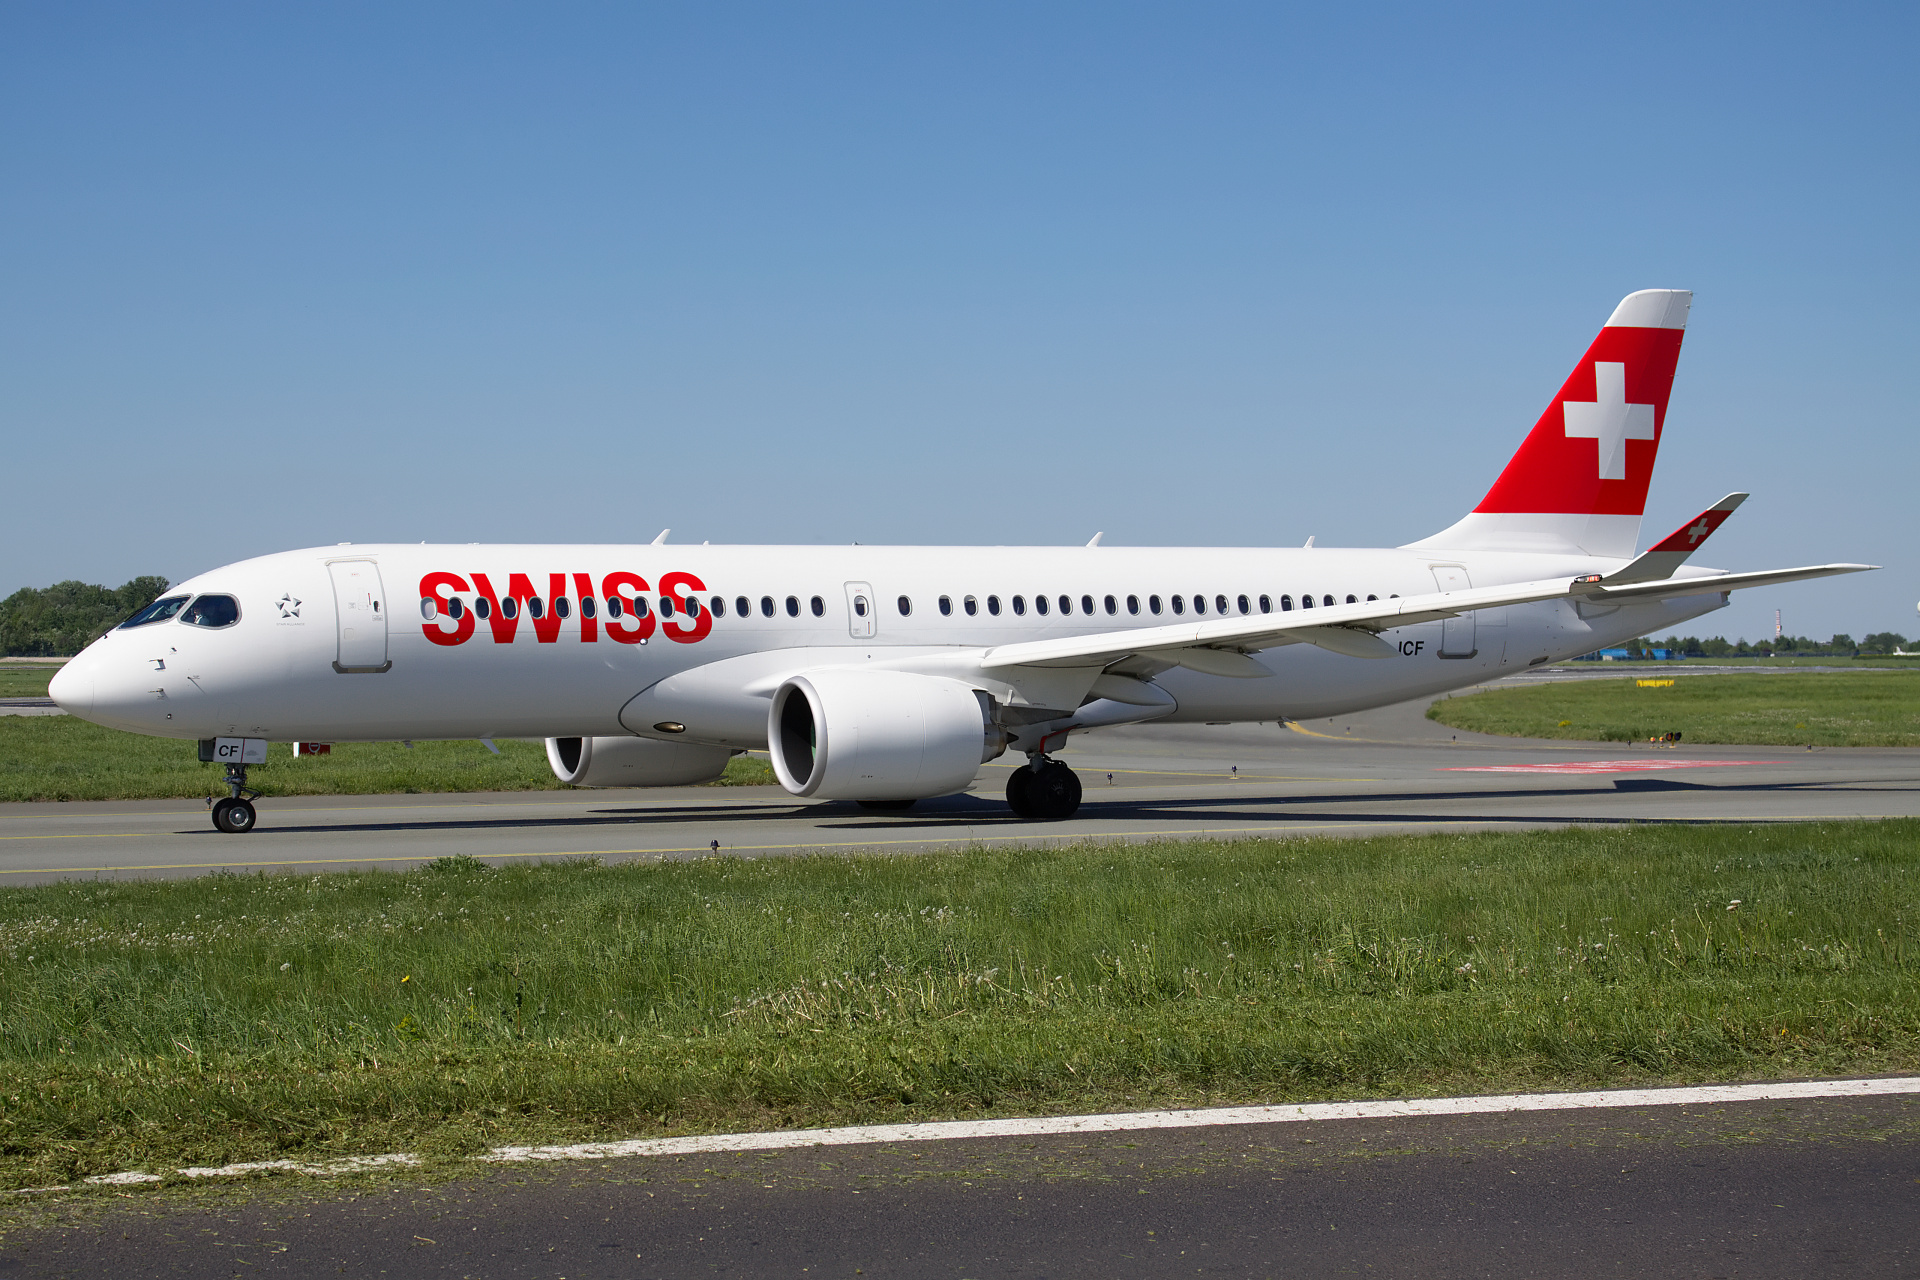 HB-JCF (Aircraft » EPWA Spotting » Airbus A220-300 » Swiss International Air Lines)